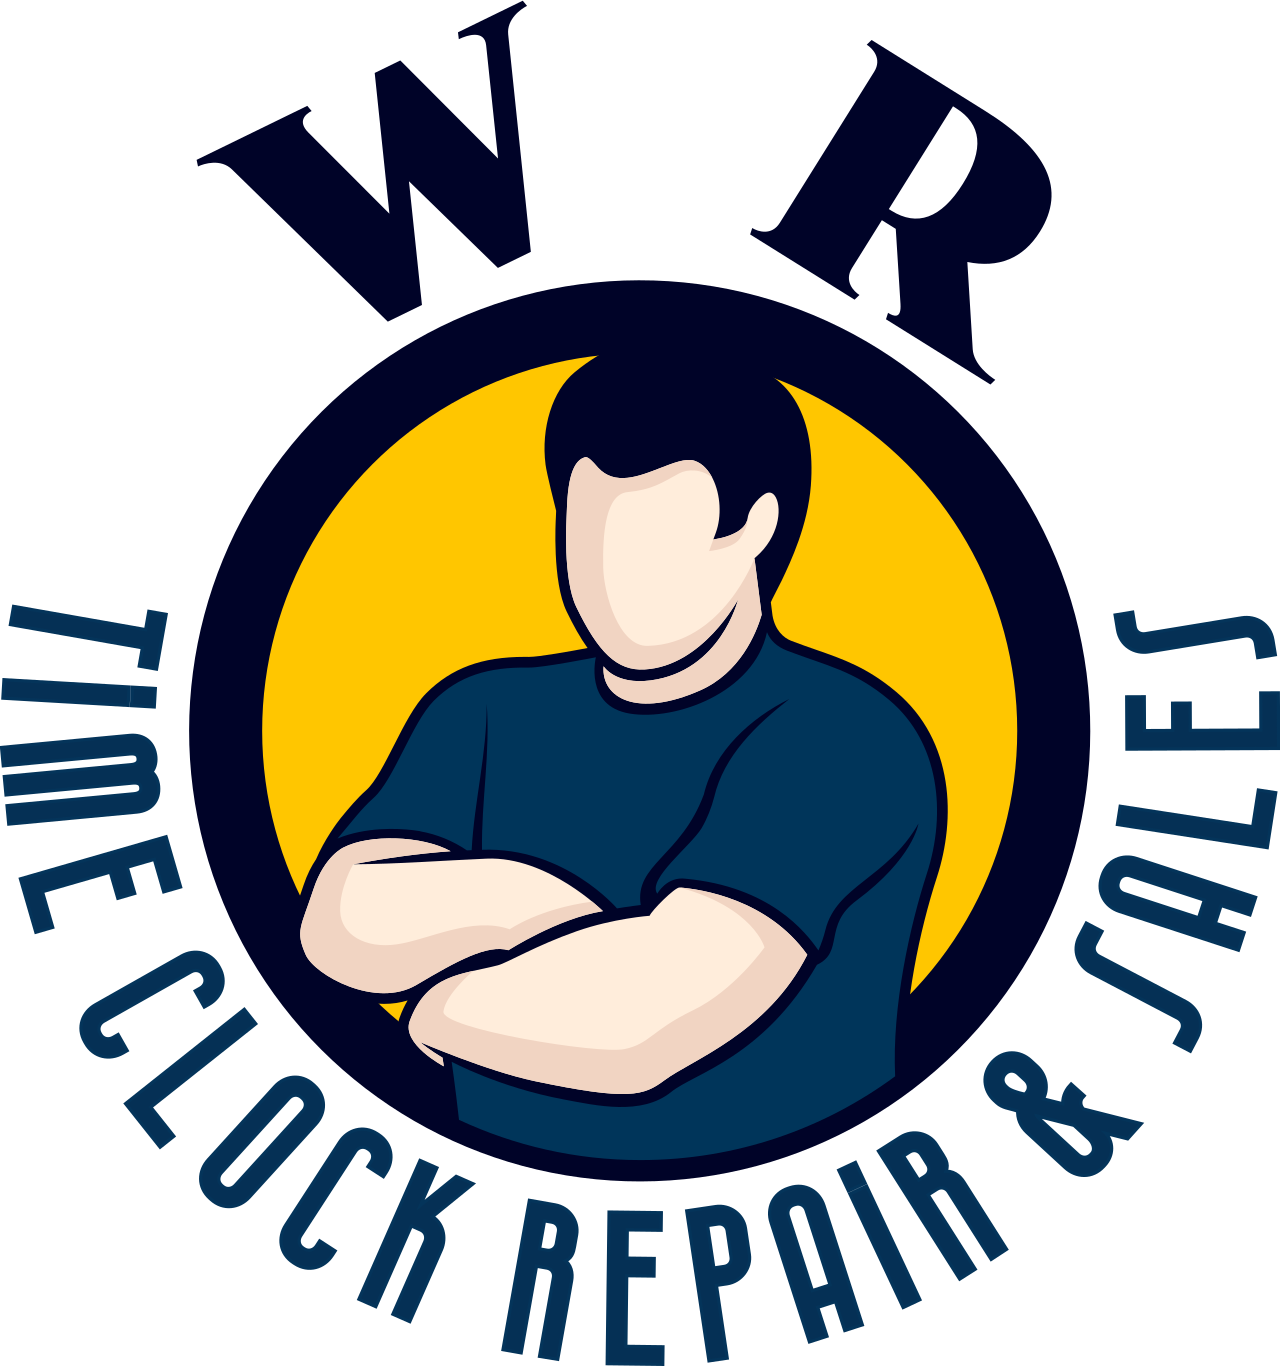 WR's logo